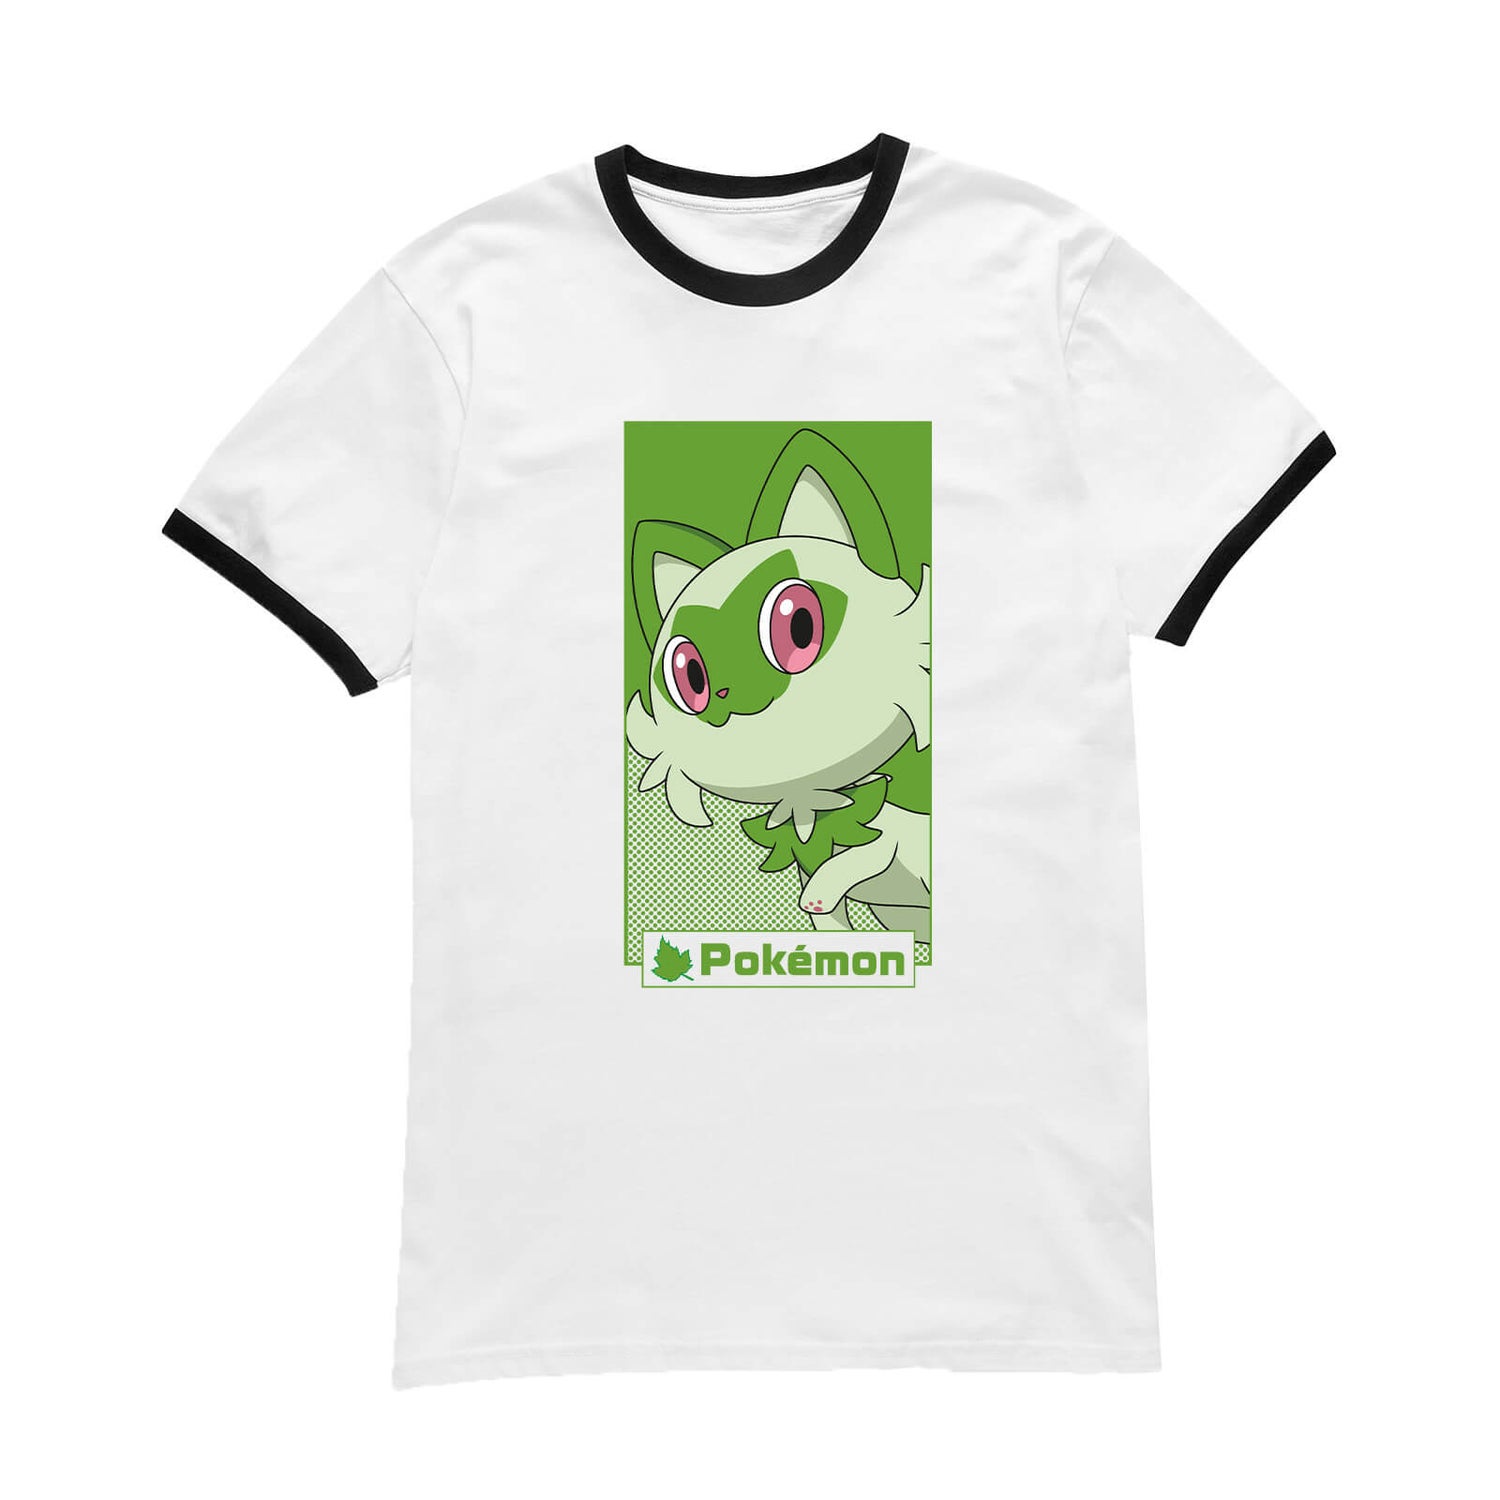 Pokémon Sprigatito Unisex Ringer T-Shirt - White/Black